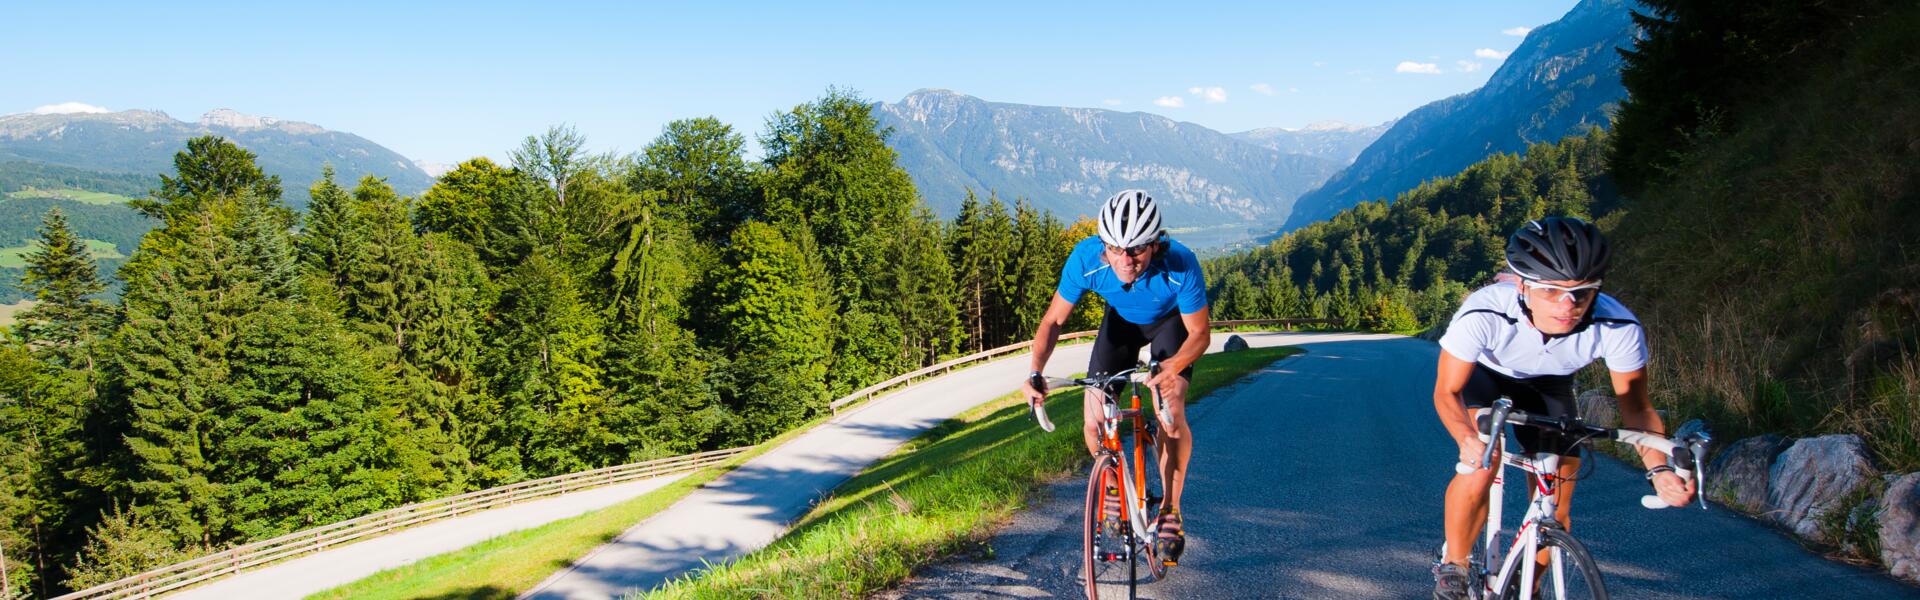 road bike tour holiday austria